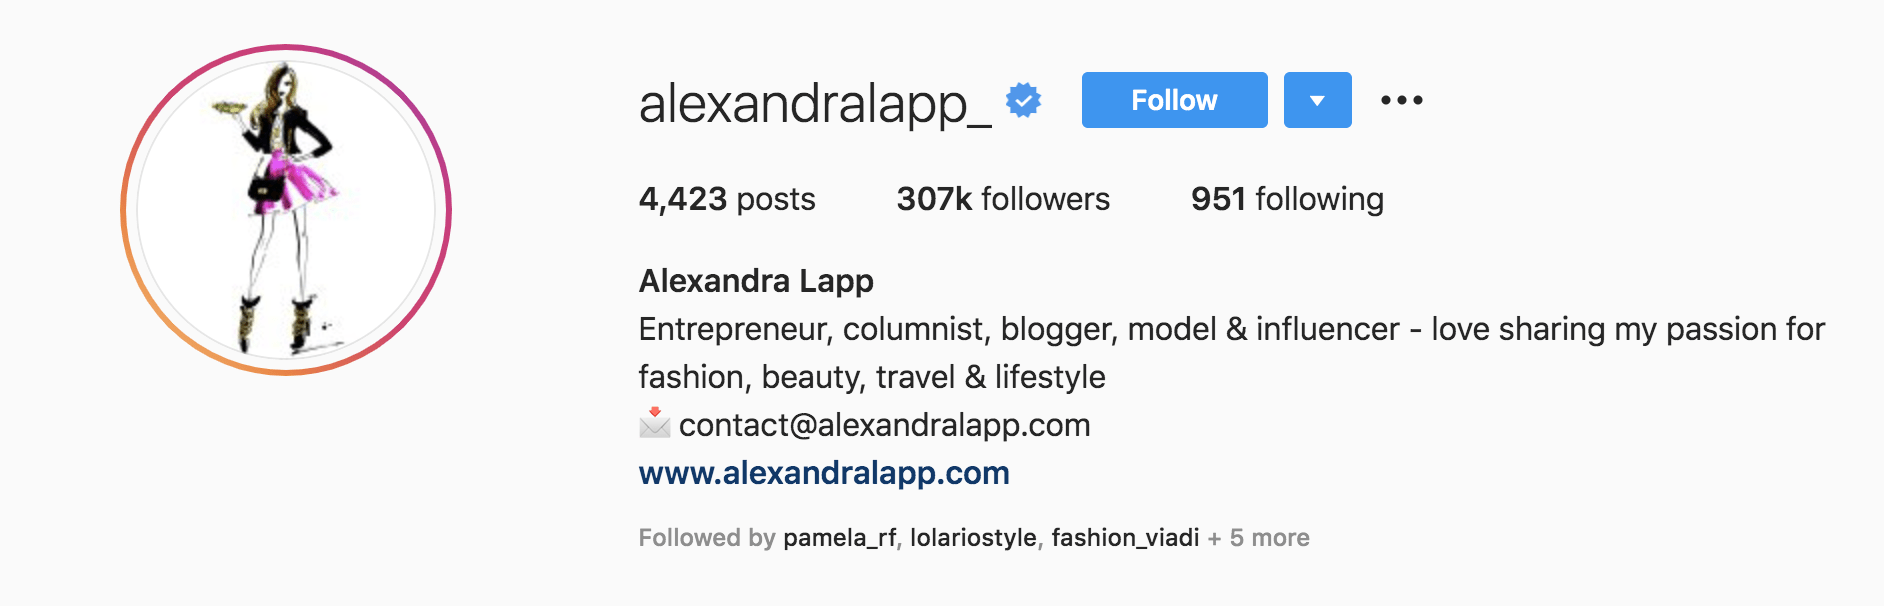 Top Fashion Influencers - Alexandra Lapp